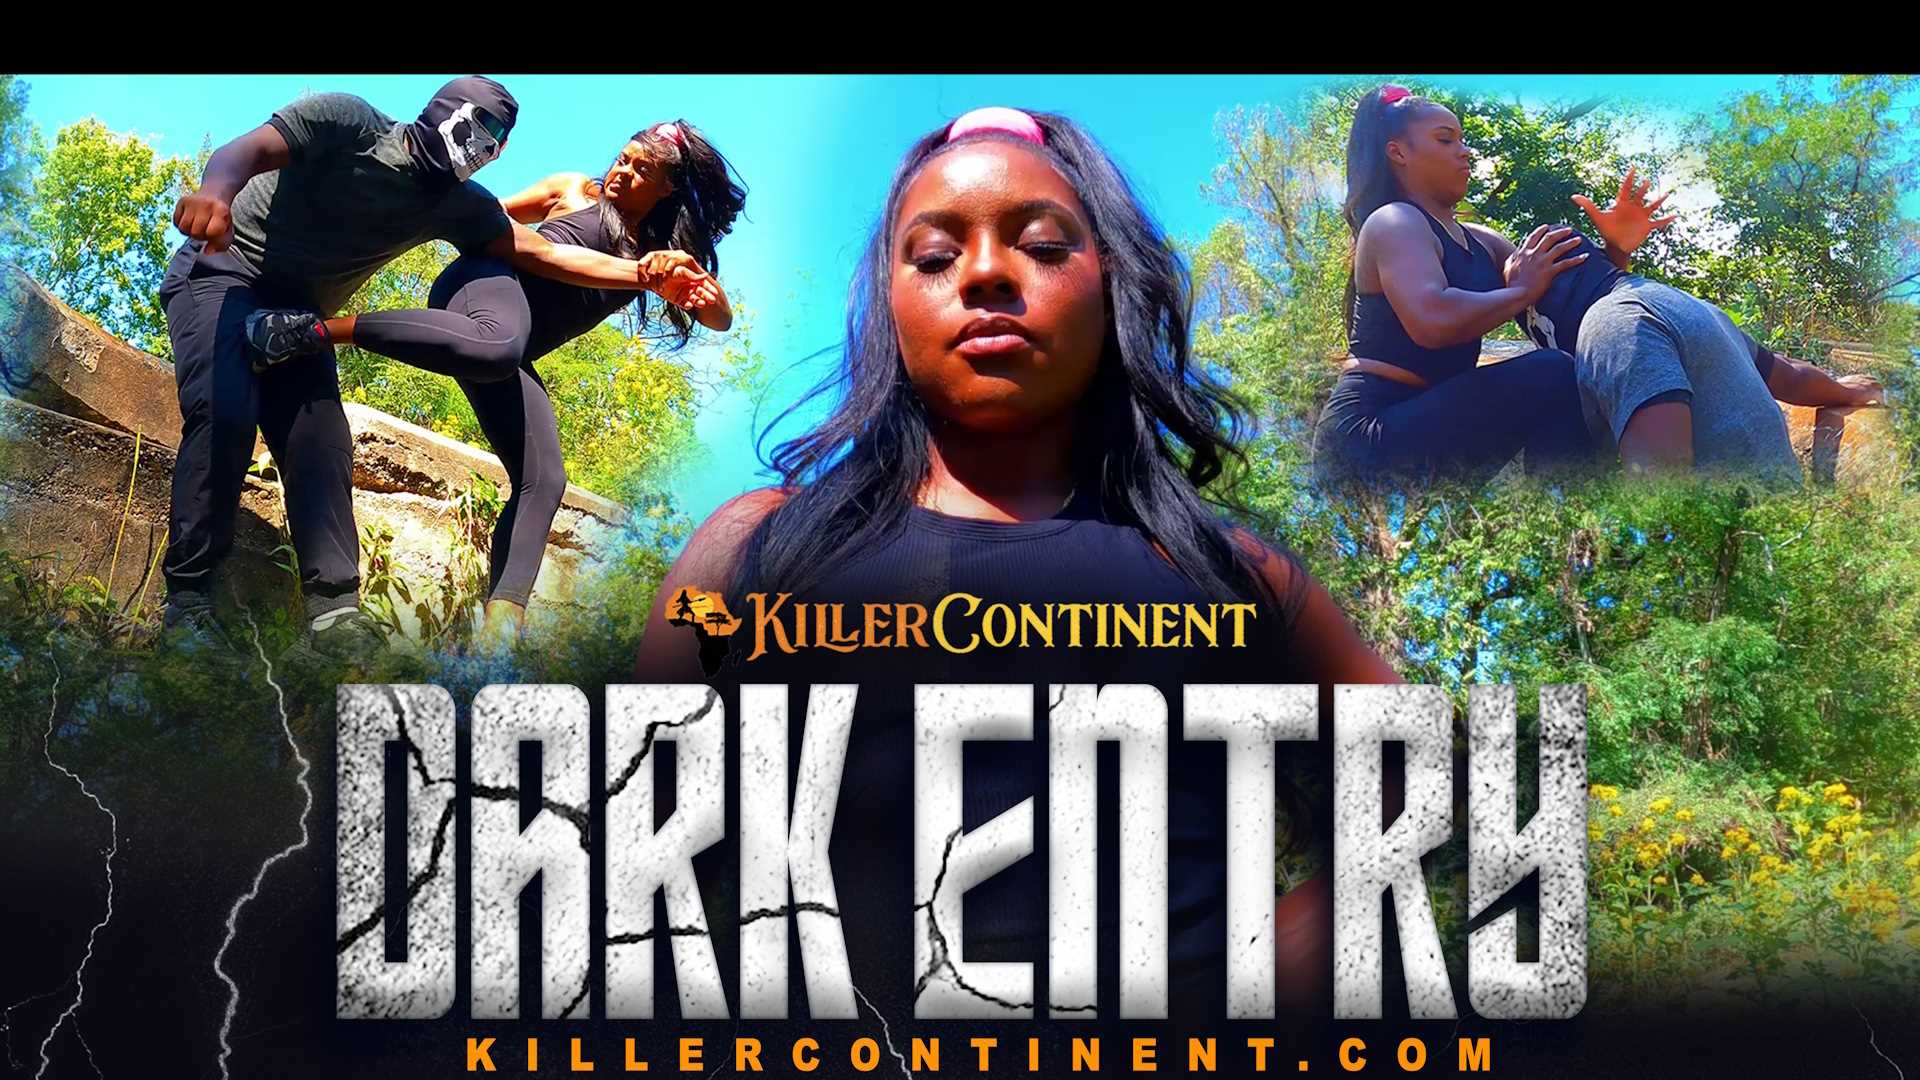 KillerContinent | Killer Continent | DARK ENTRY